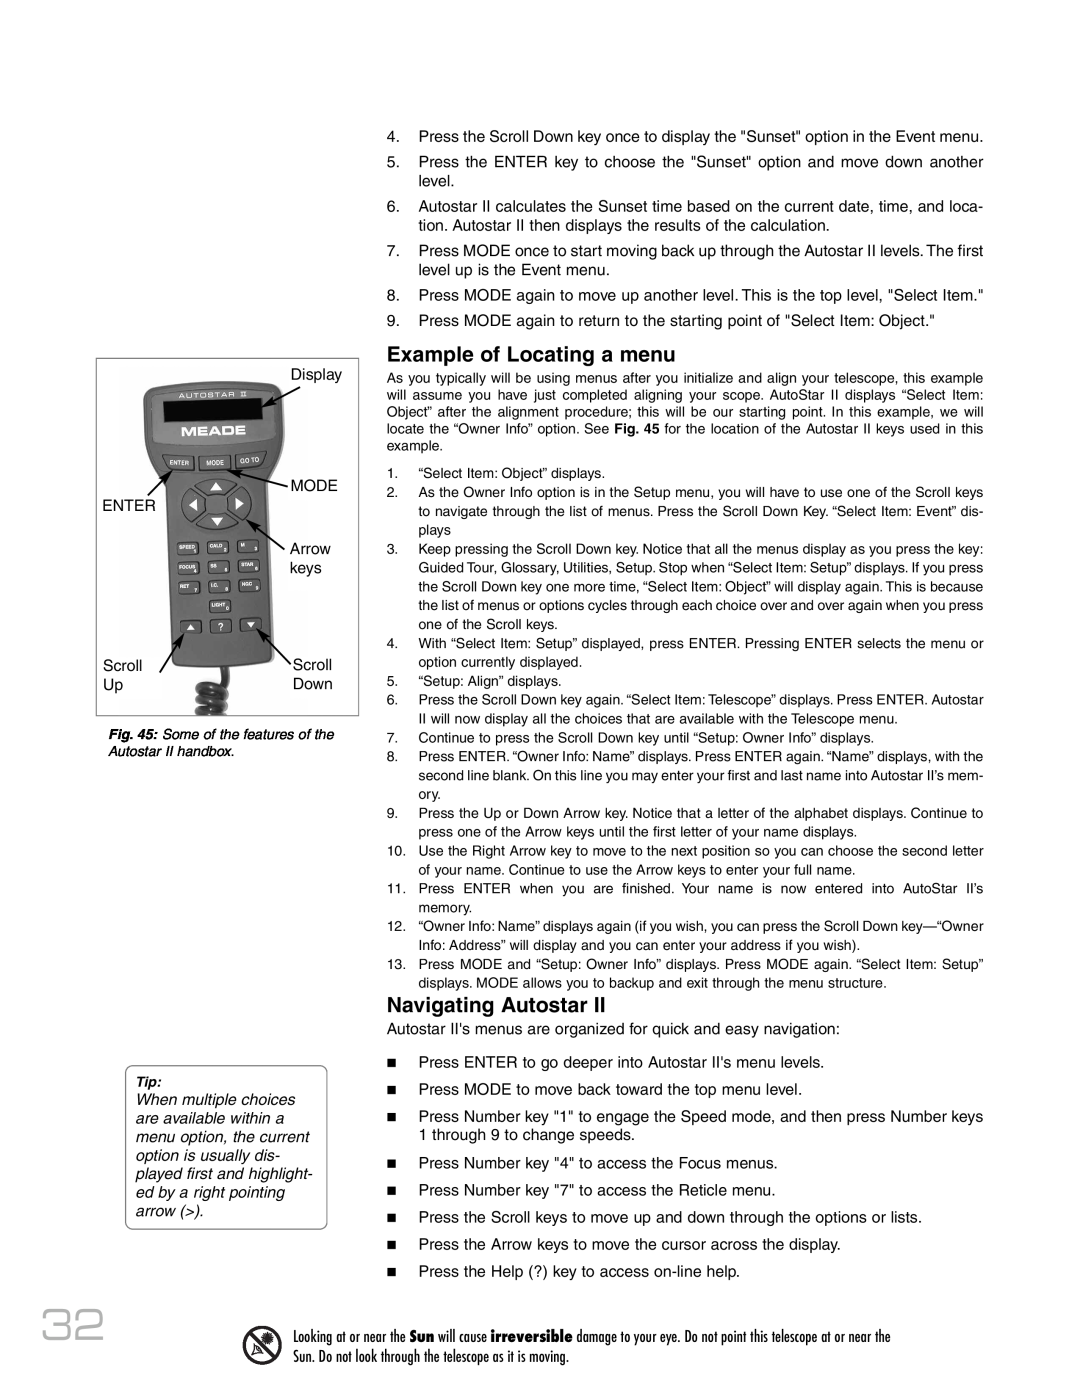 Meade RCX400 instruction manual Example of Locating a menu, Navigating Autostar 